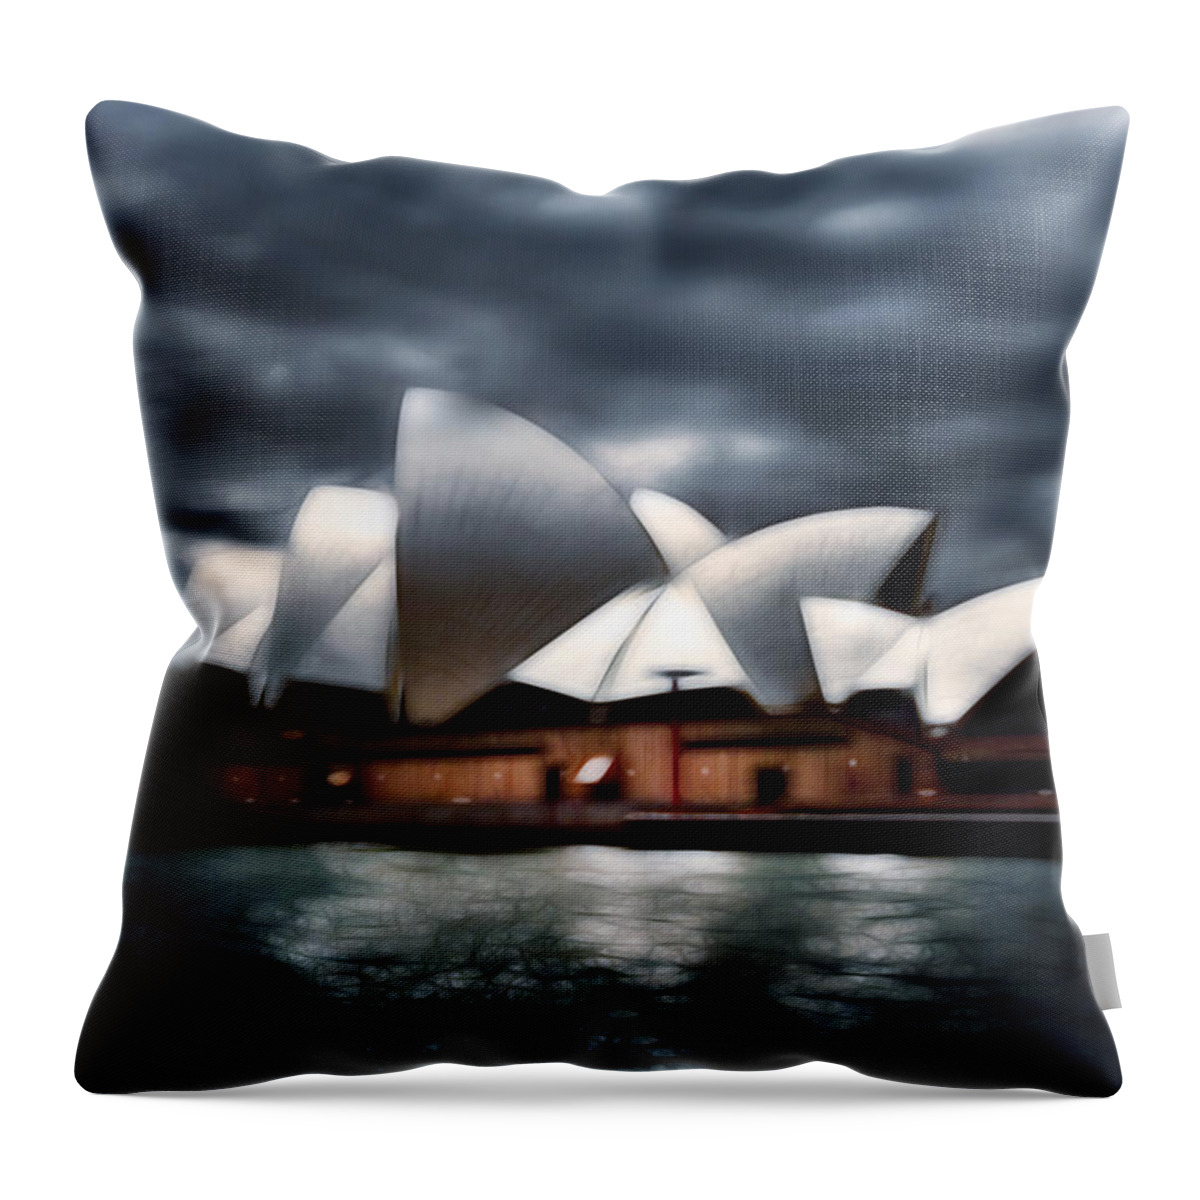 Sydney Opera House In A Storm Throw Pillow featuring the photograph Sydney Opera House In A Storm by Georgiana Romanovna